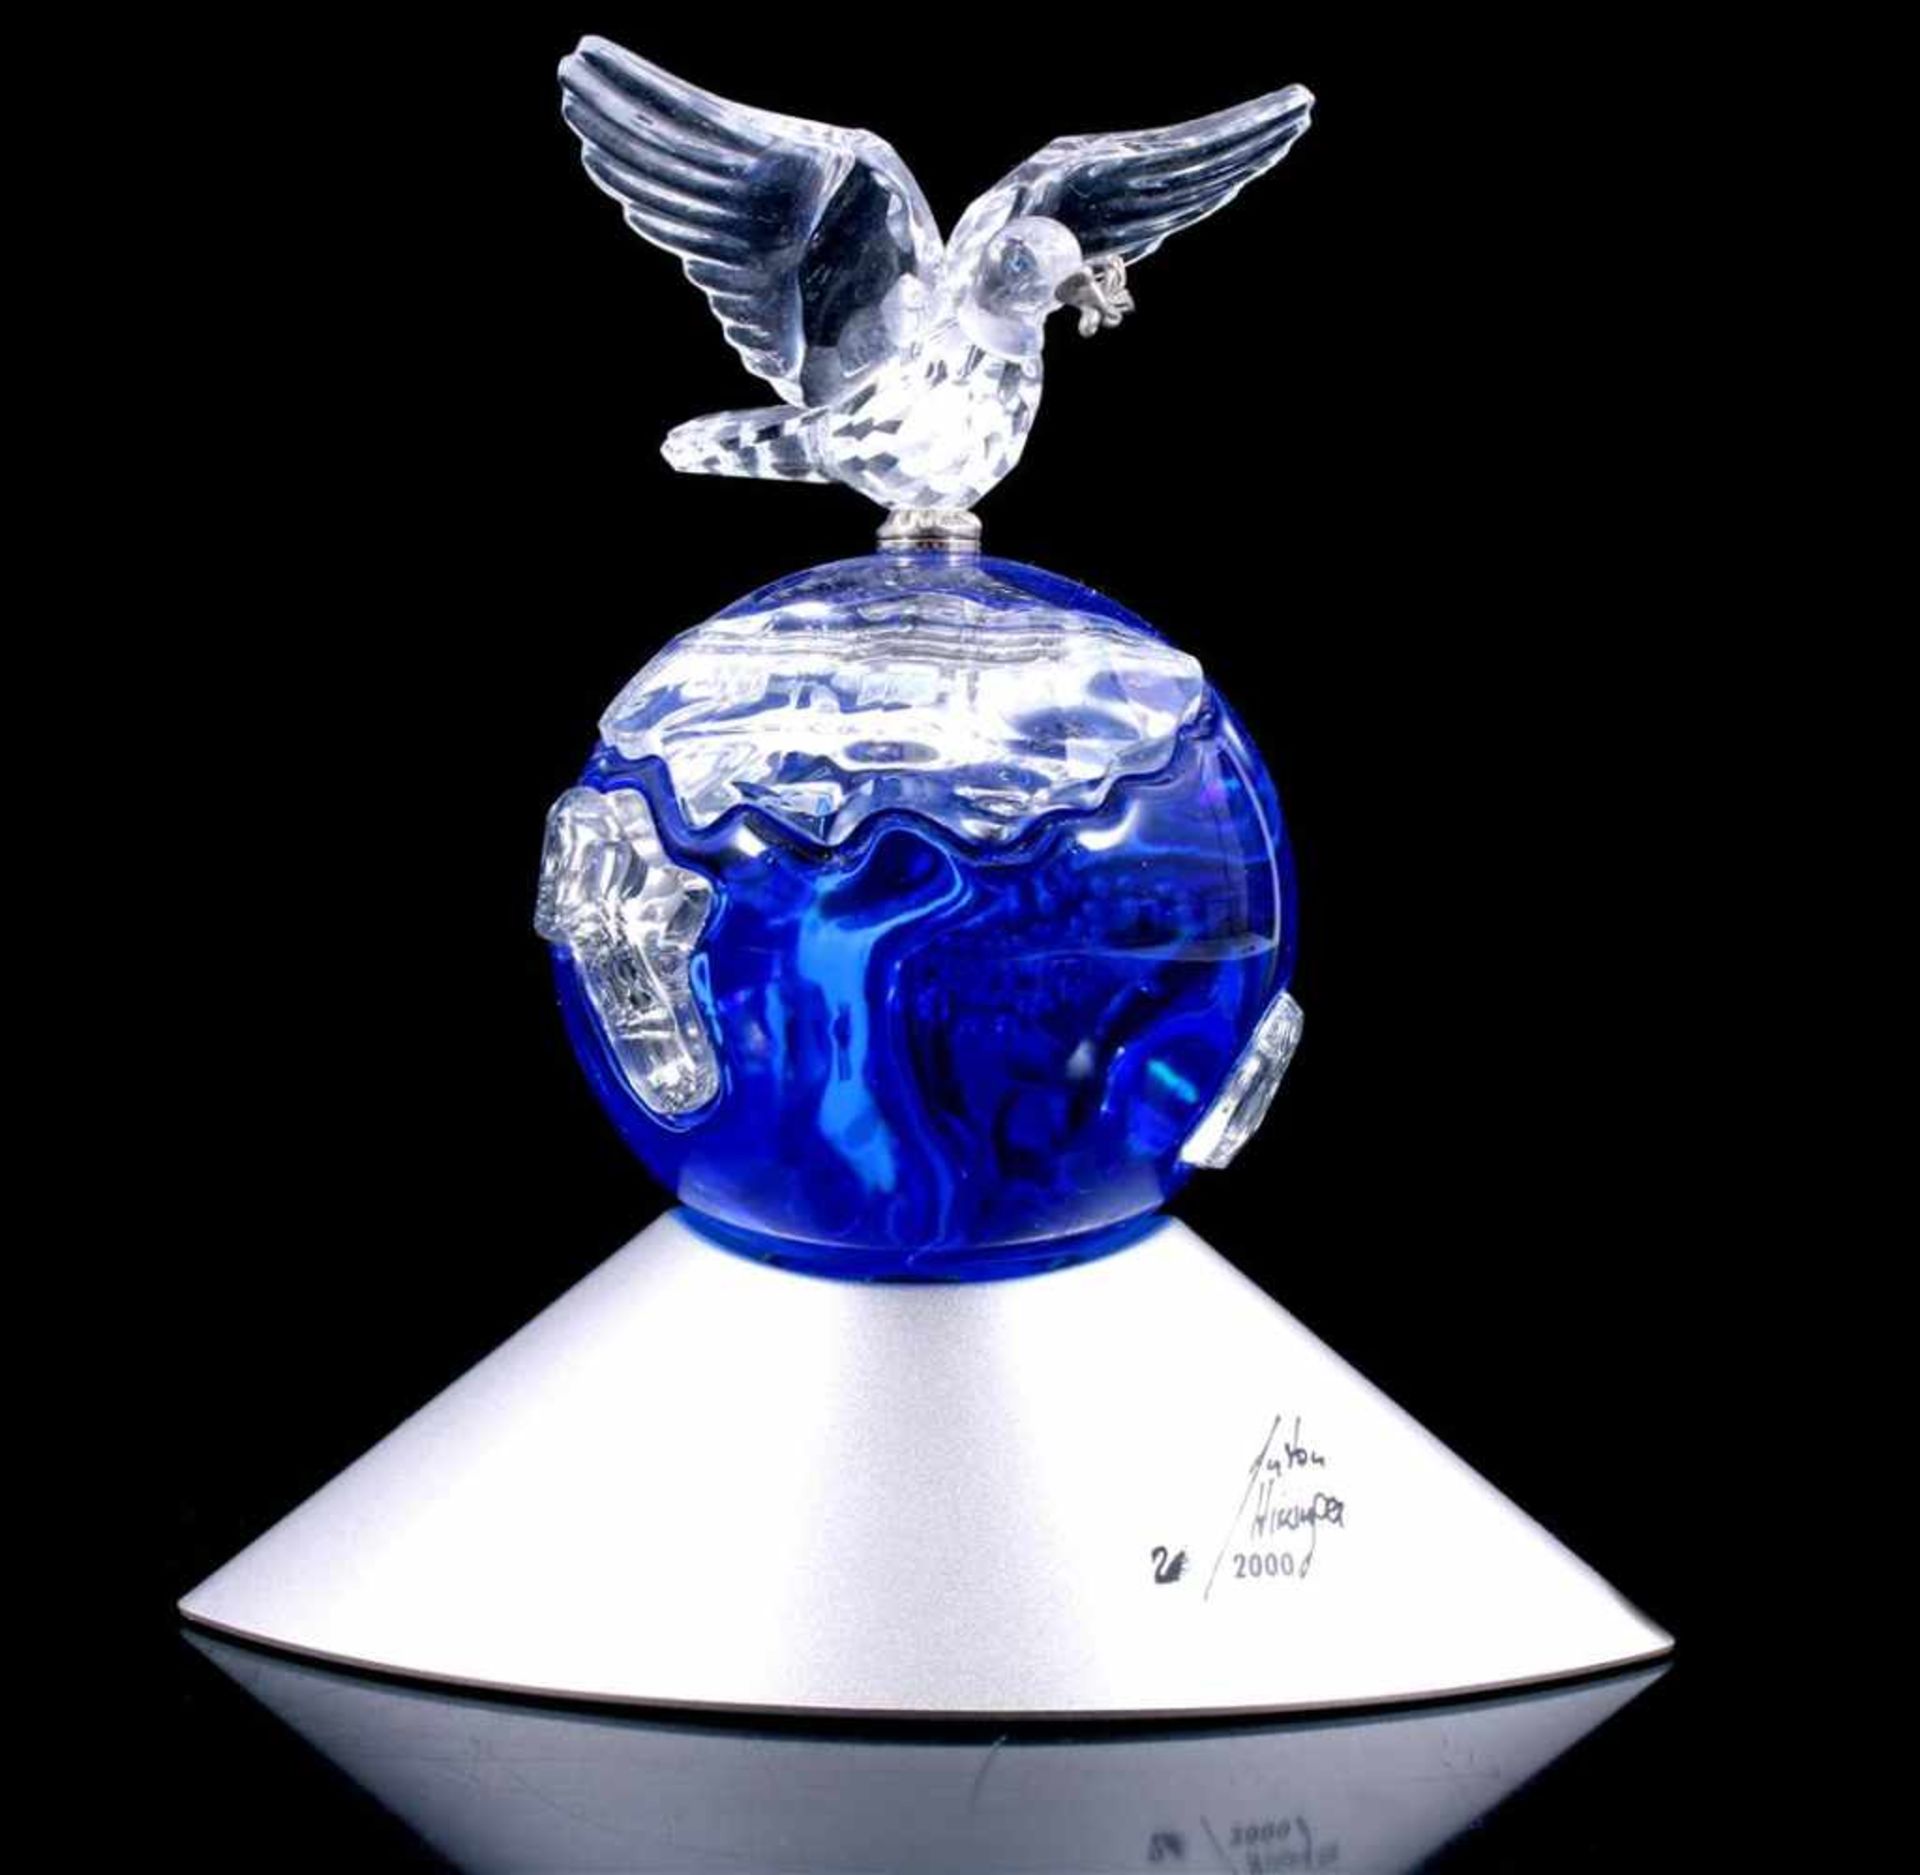 Swarovski Crystal Planet op zilverkleurige display, jaar 2000, ontwerp Anton Hirzinger 12 cm hoog